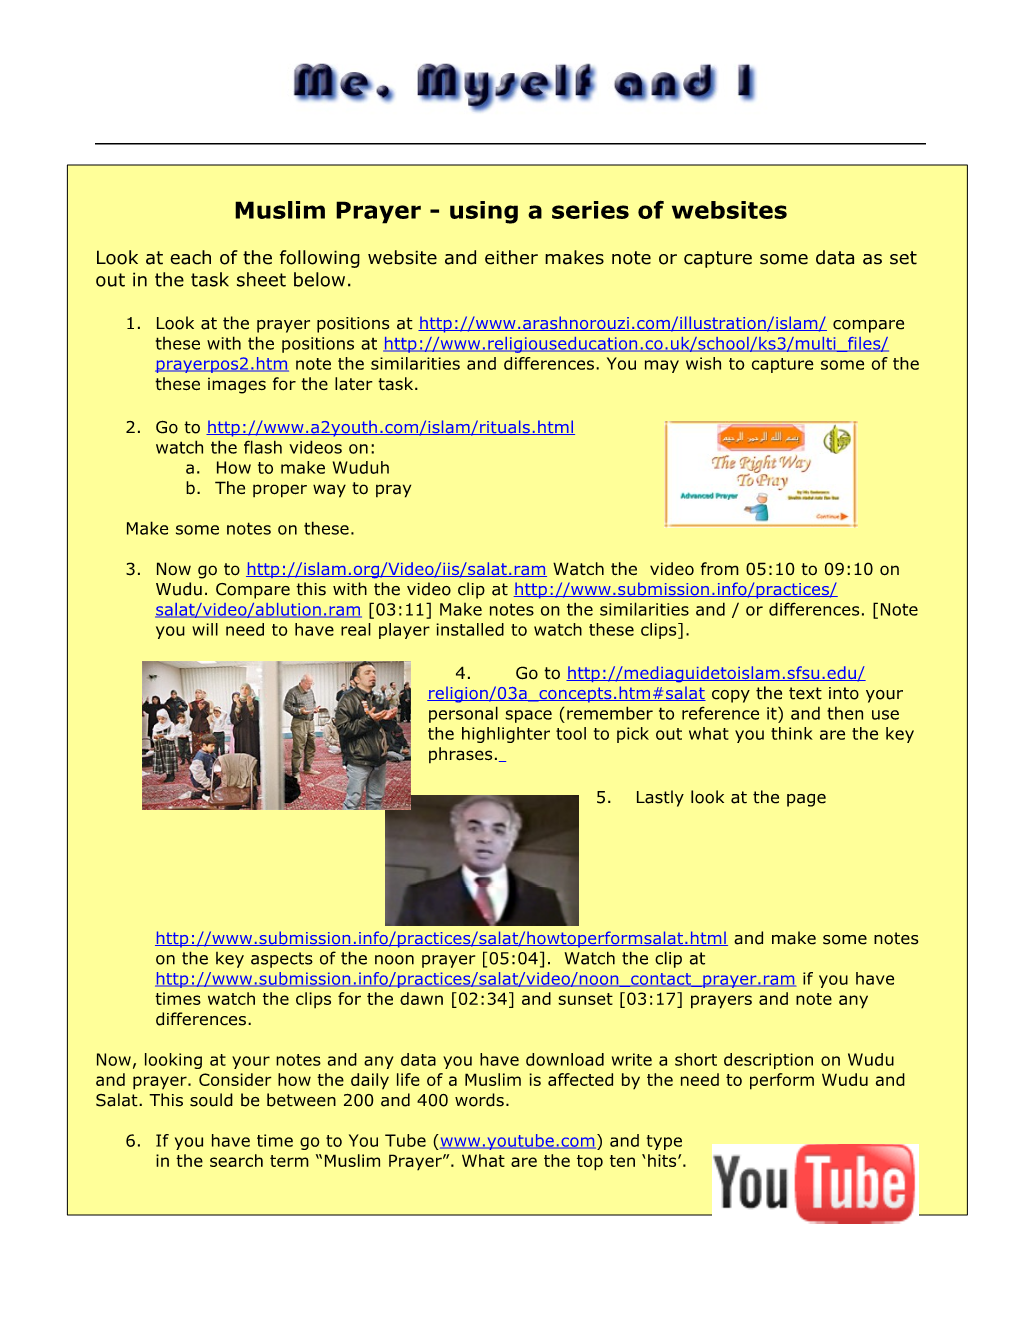 Muslim Prayer - Using a Series of Websites